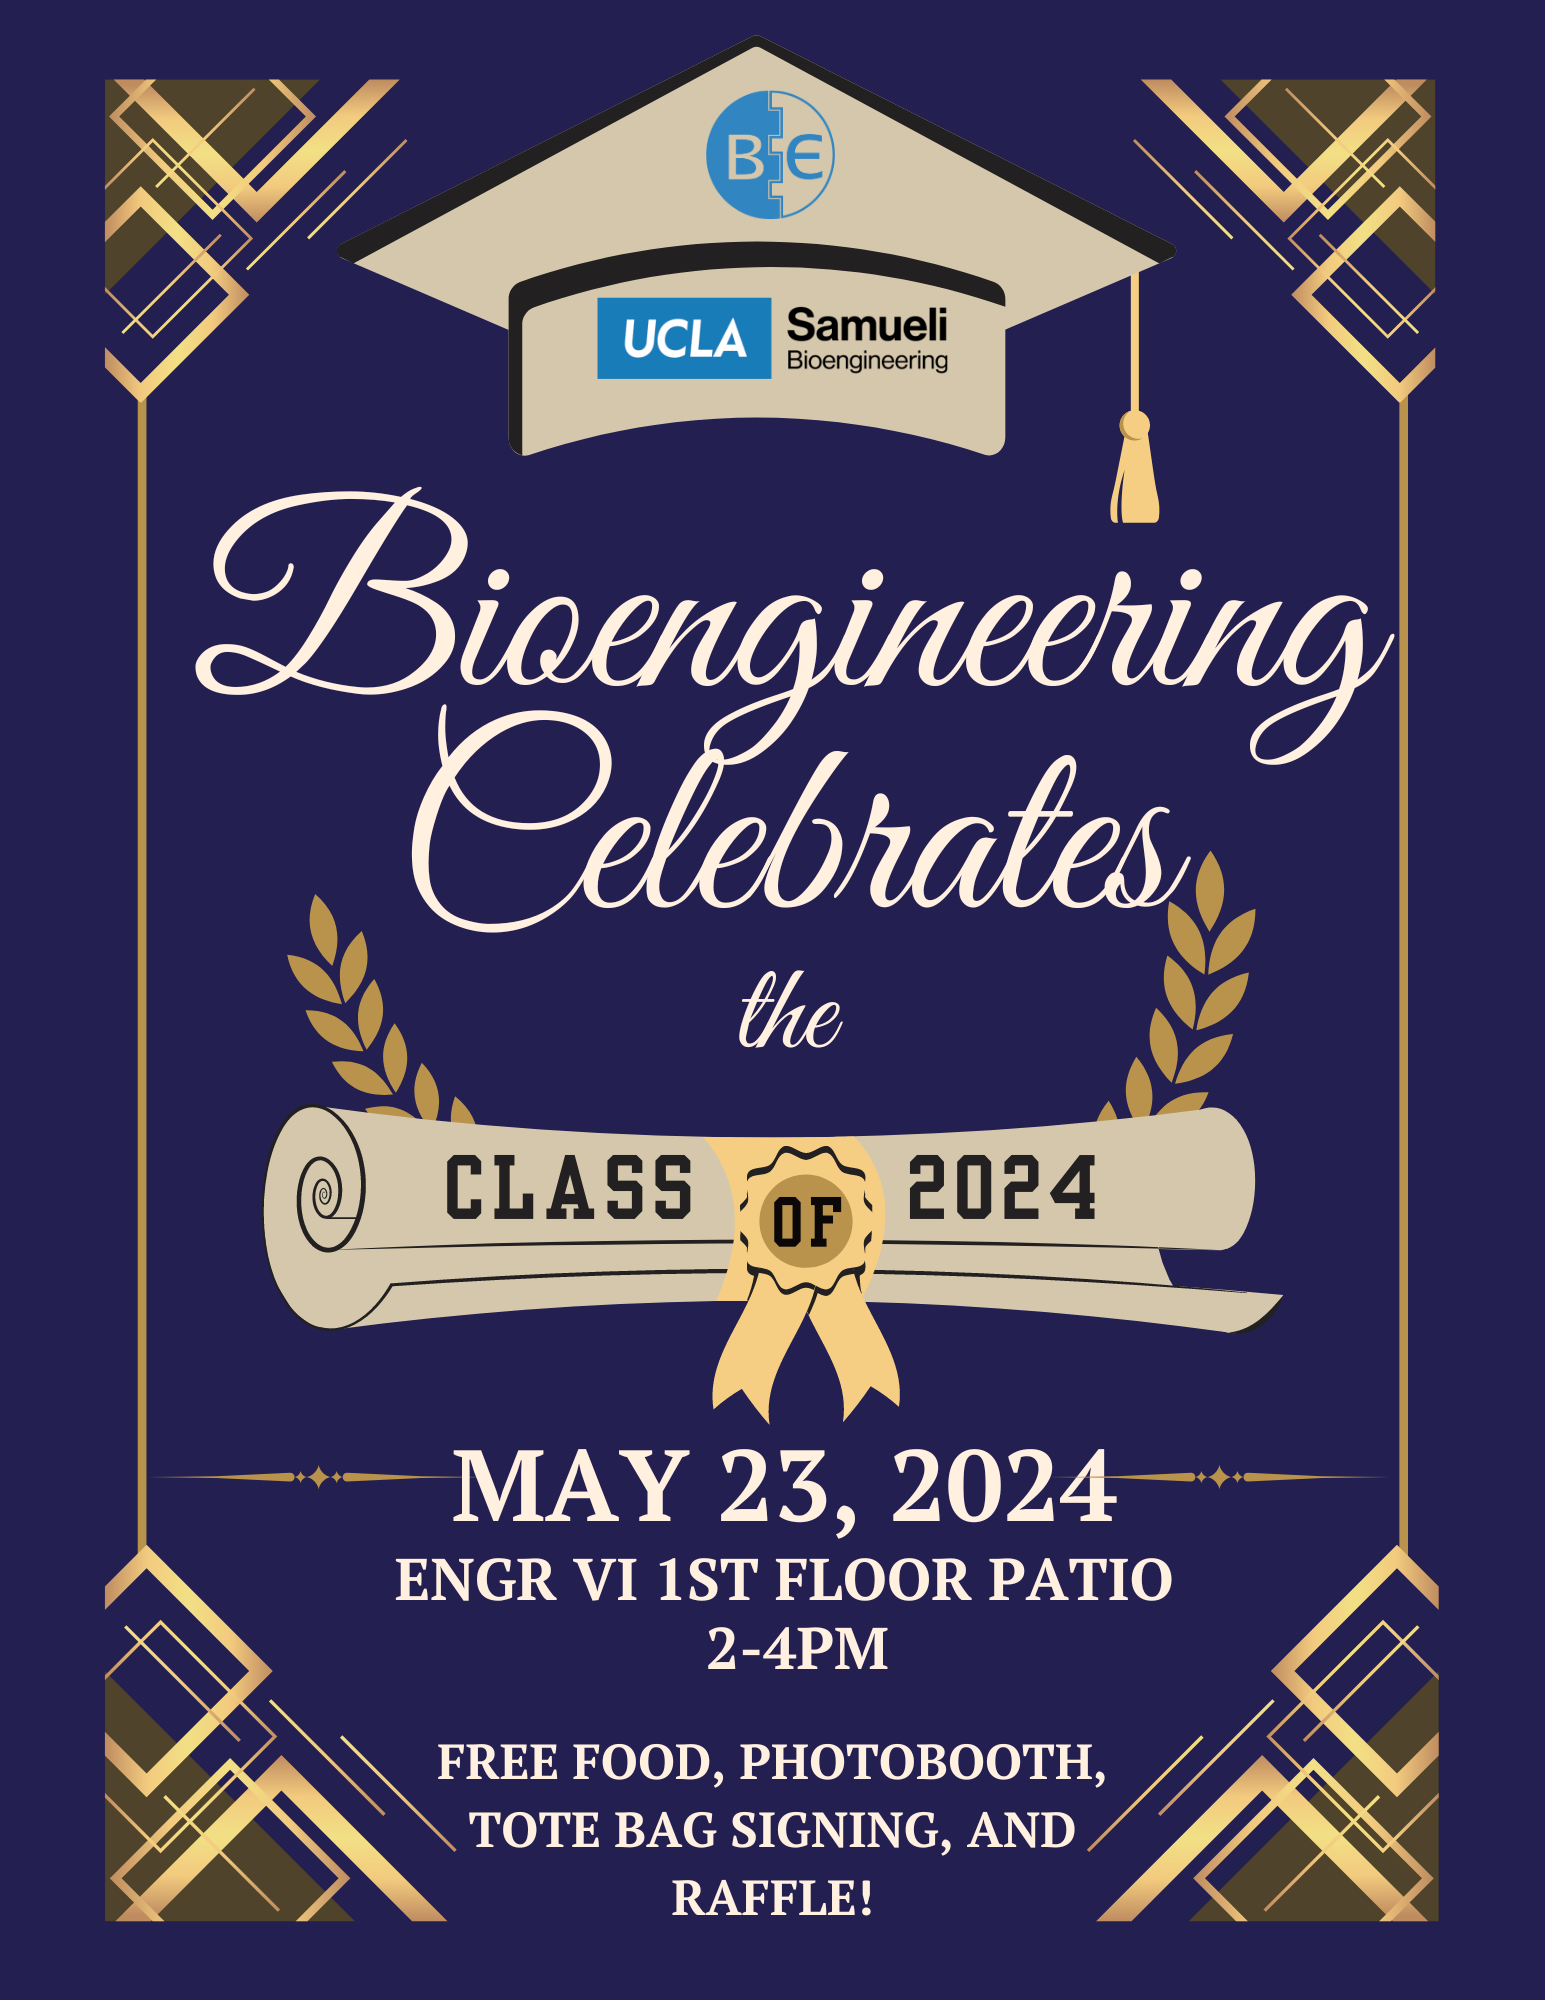 Bioengineering Celebrates the Class of 2024